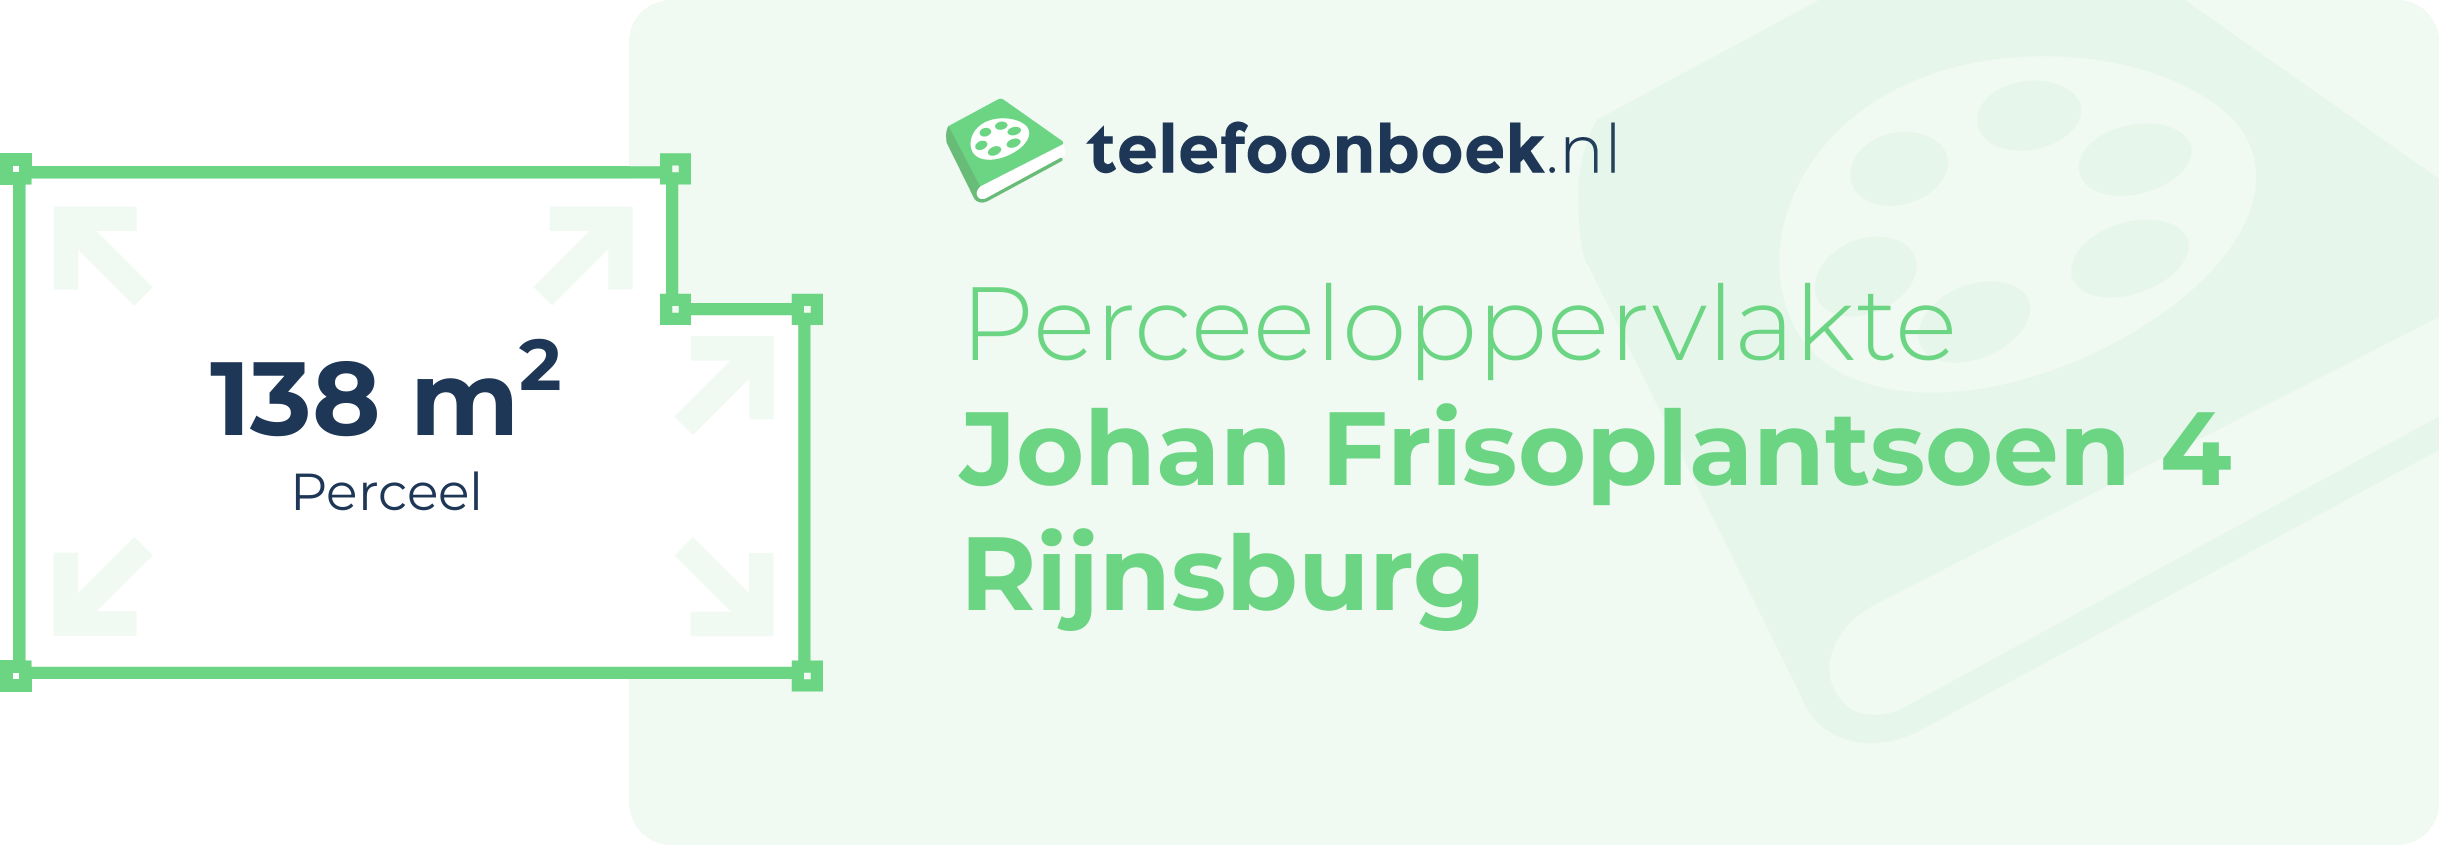 Perceeloppervlakte Johan Frisoplantsoen 4 Rijnsburg